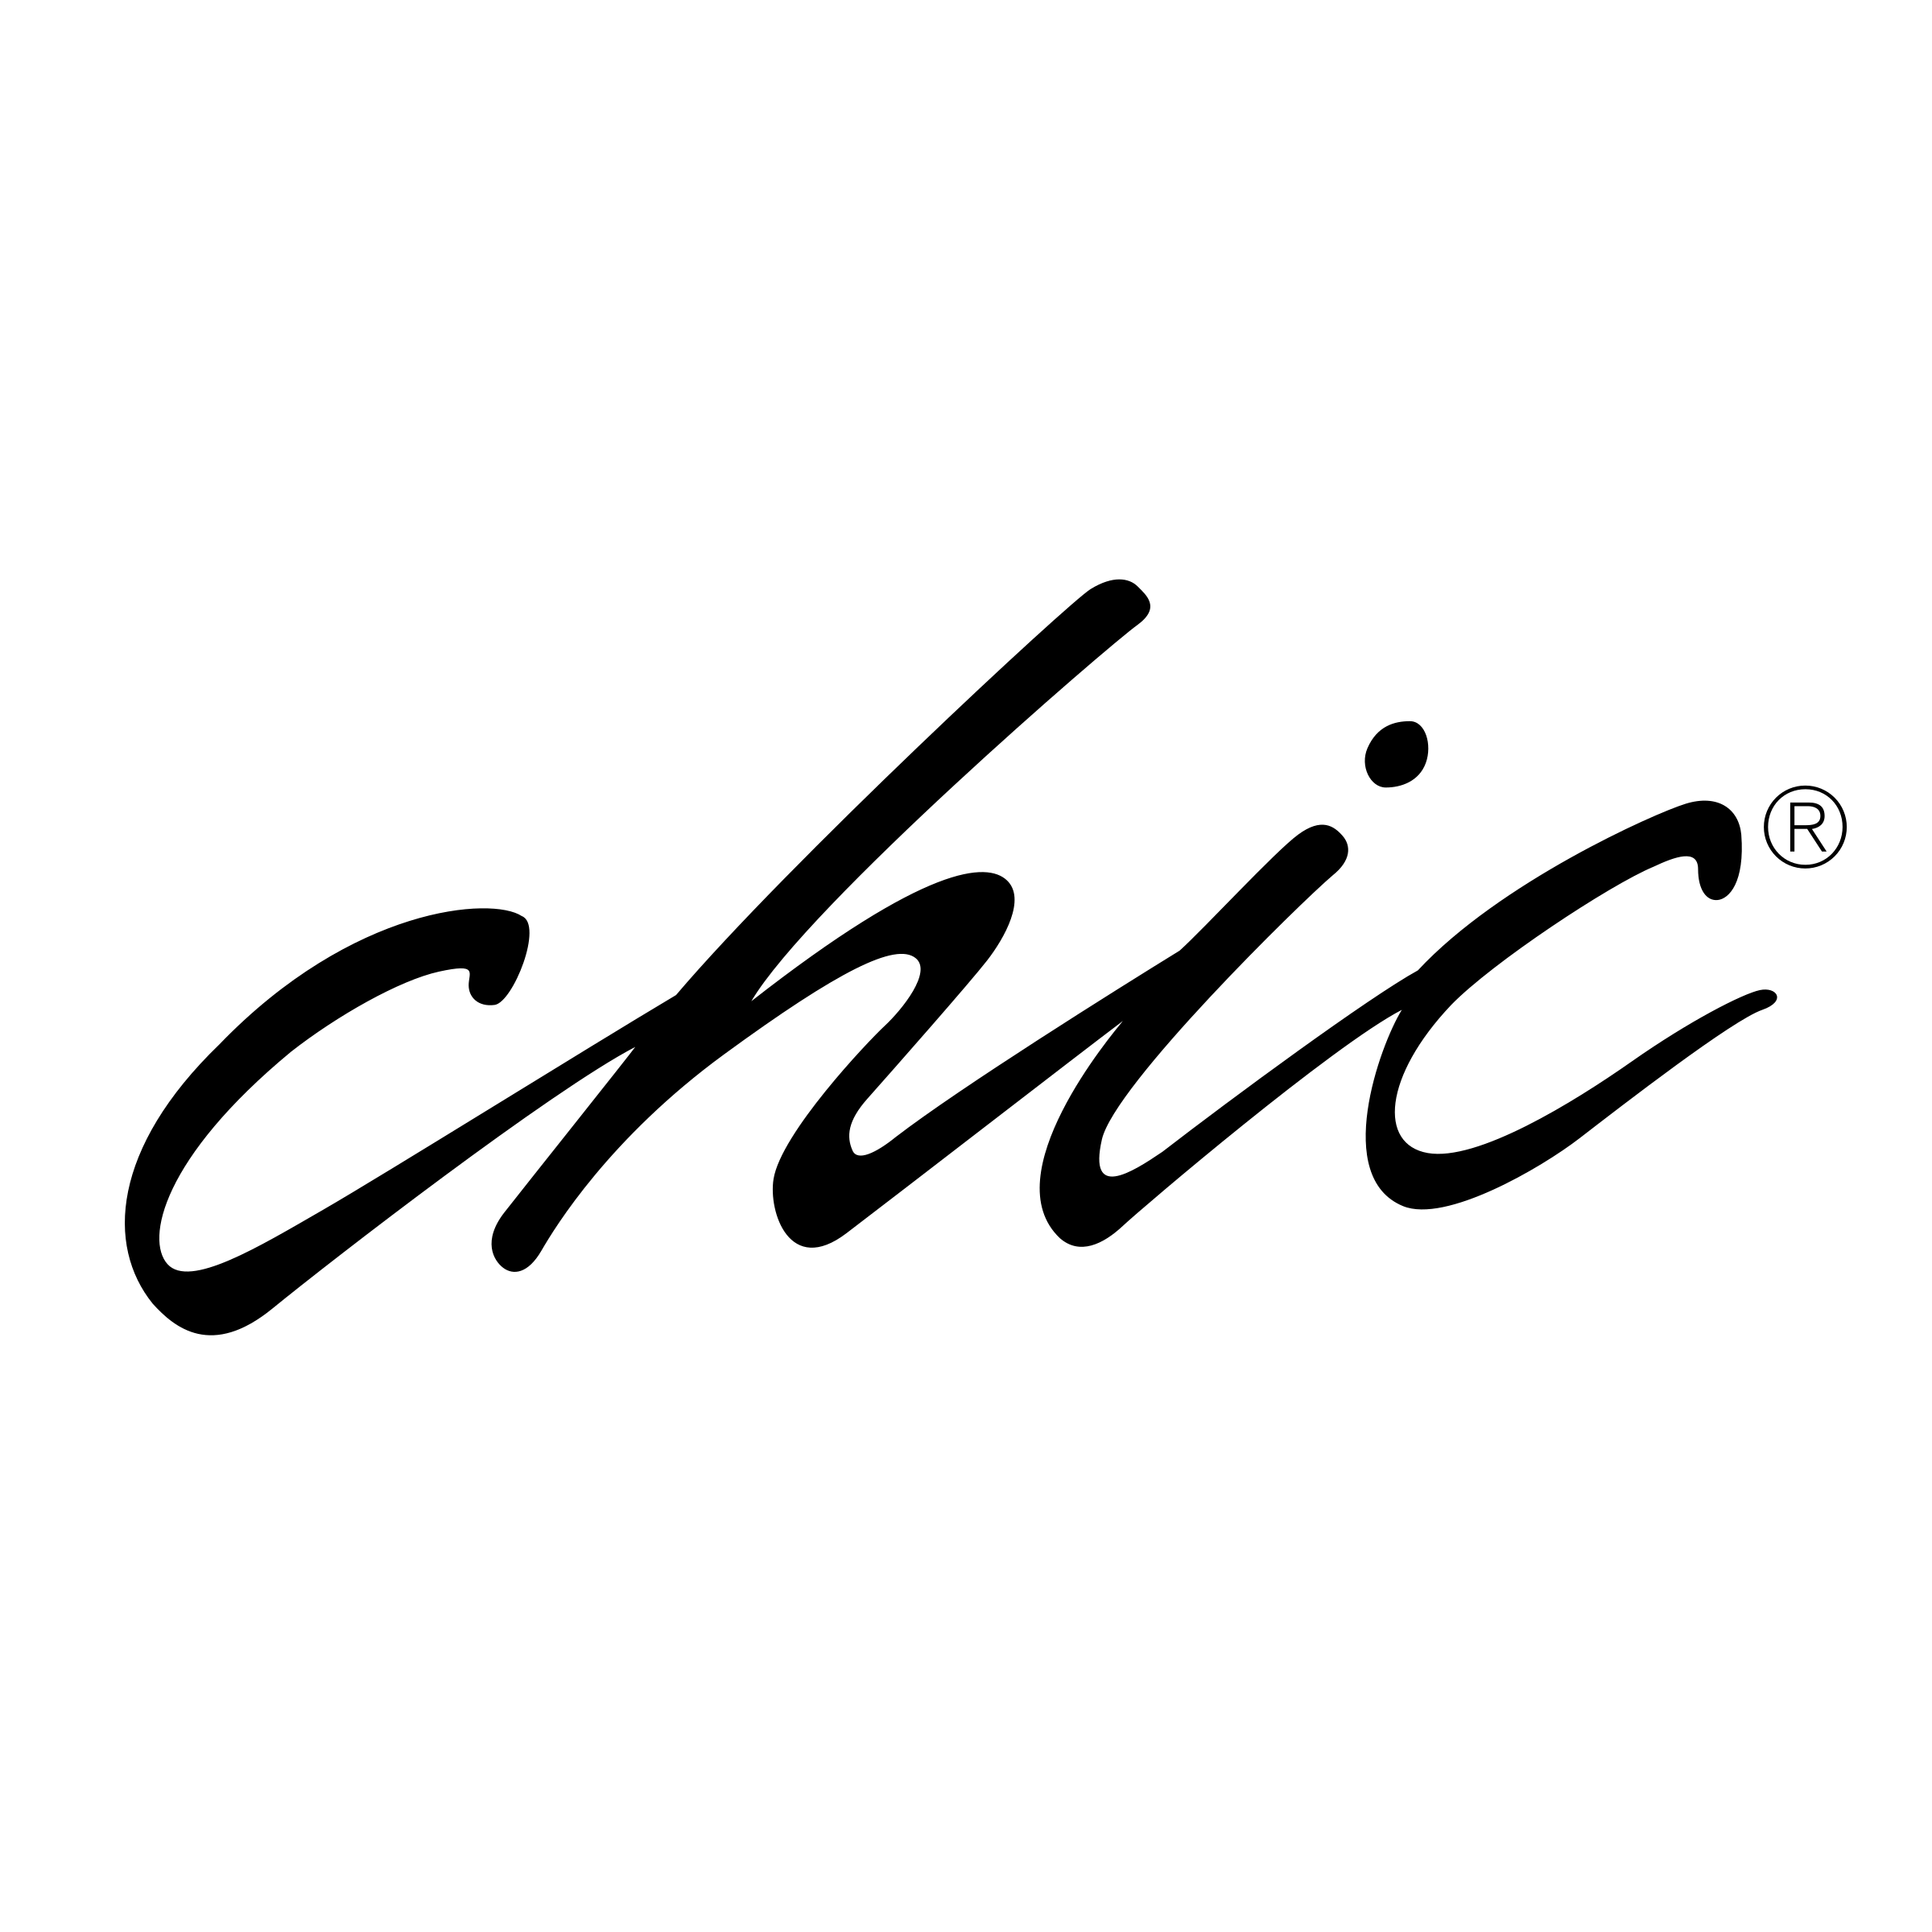 Chic Logo - Chic Logo PNG Transparent & SVG Vector